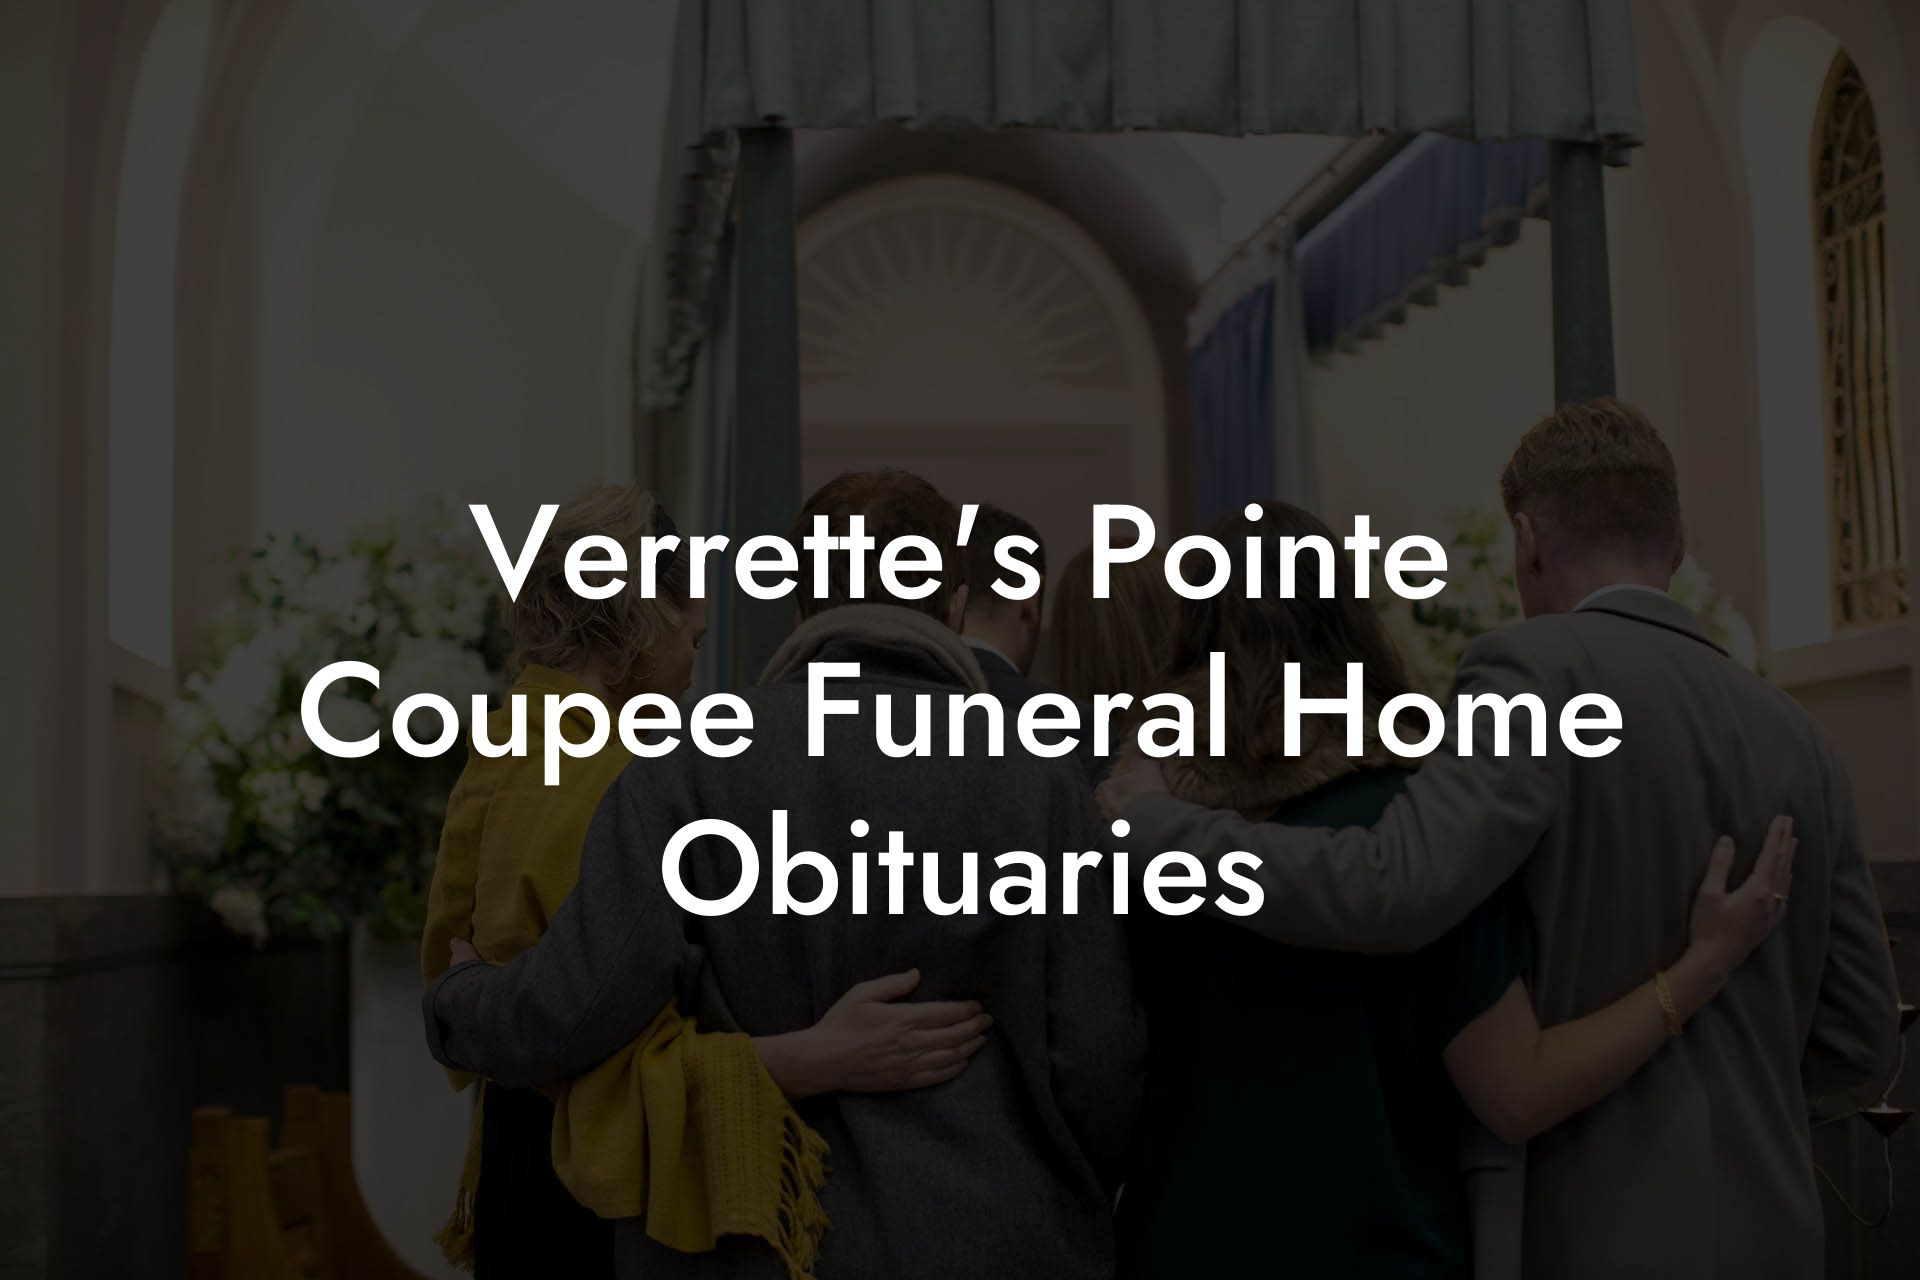 Verrette's Pointe Coupee Funeral Home Obituaries